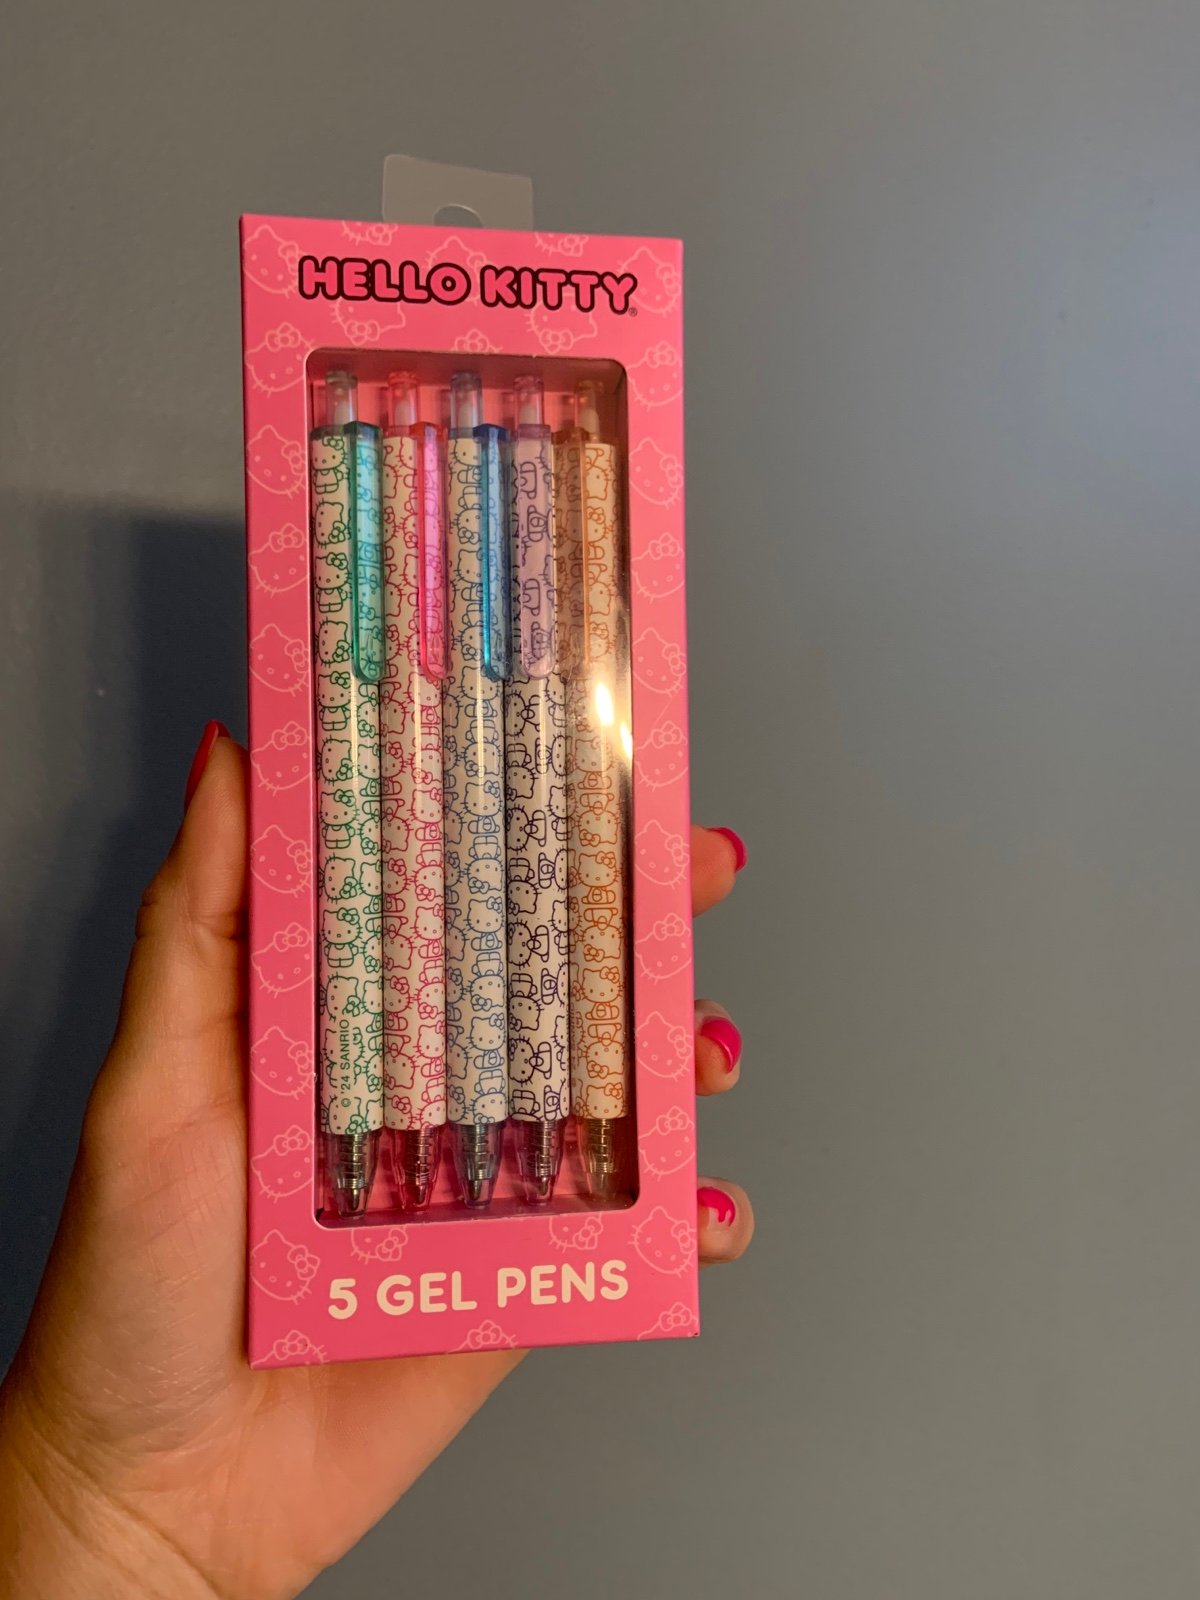 Hello Kitty gel pens cRebERXve